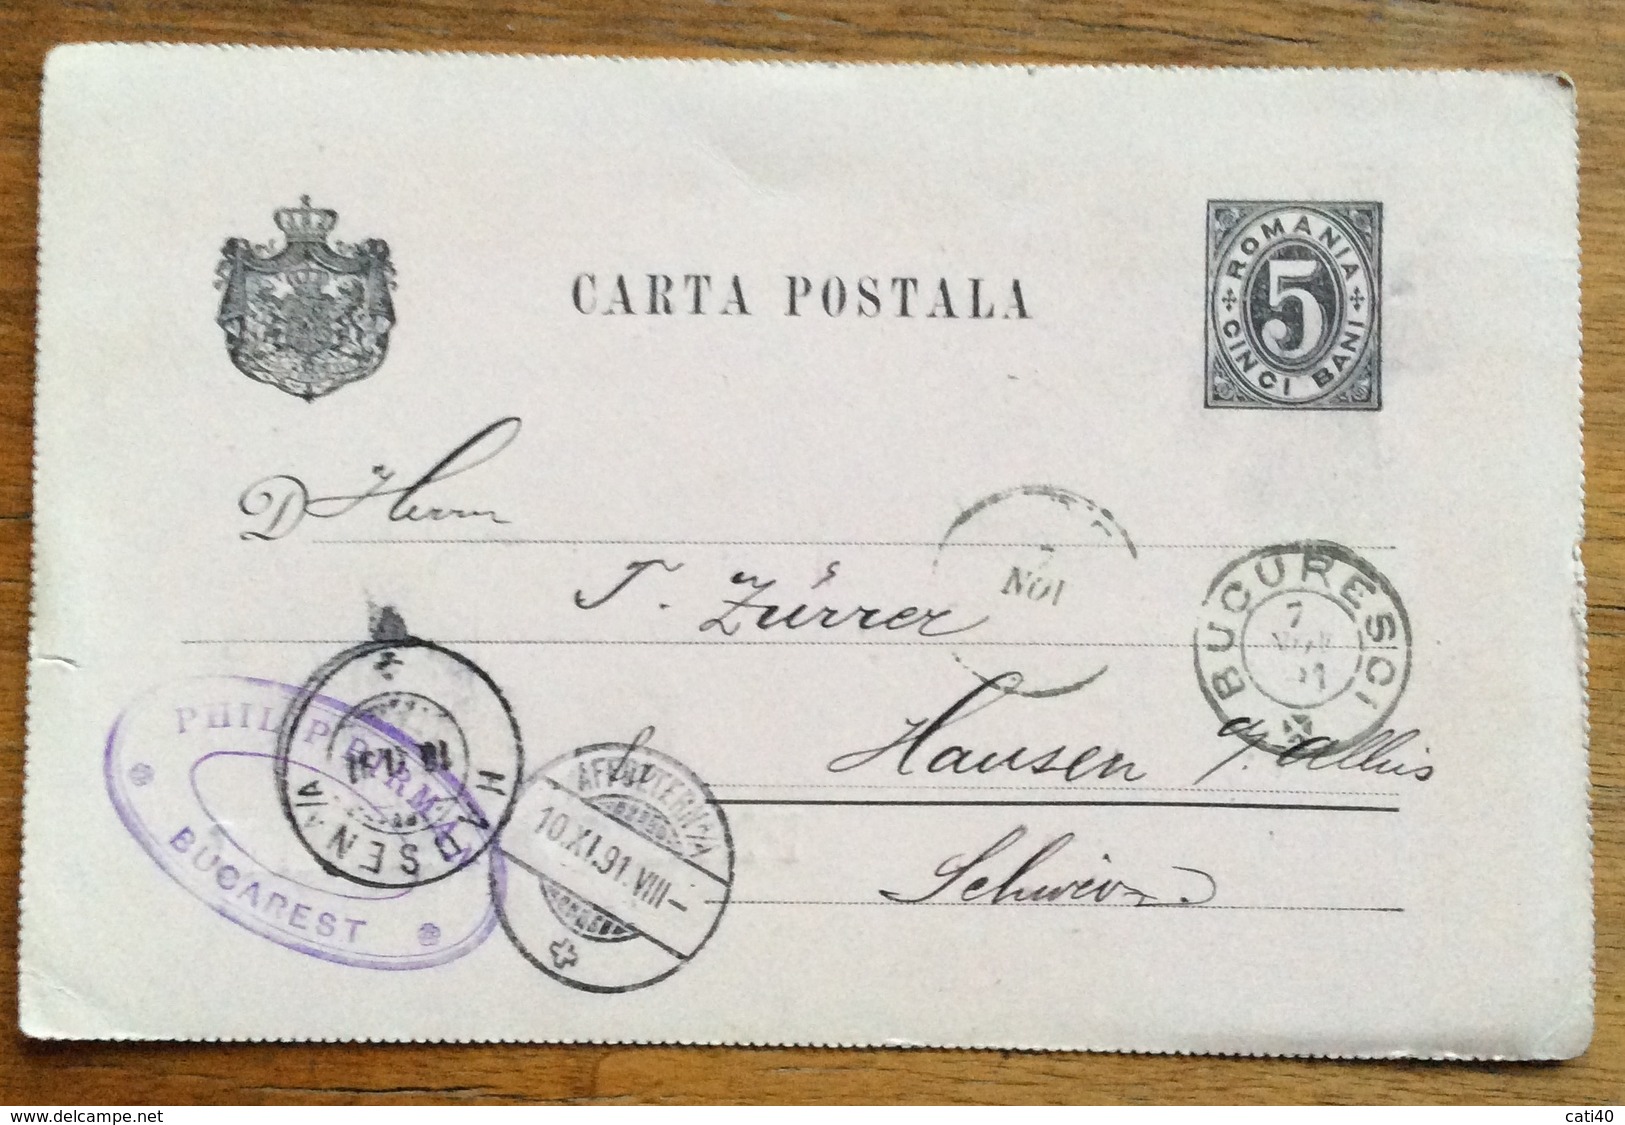 ROMANIA  CARTA POSTALE POST CARD  5 Bani  FROM BUCUREȘCI  7/11/1891  TO HAUSEN SUISSE - Lituania